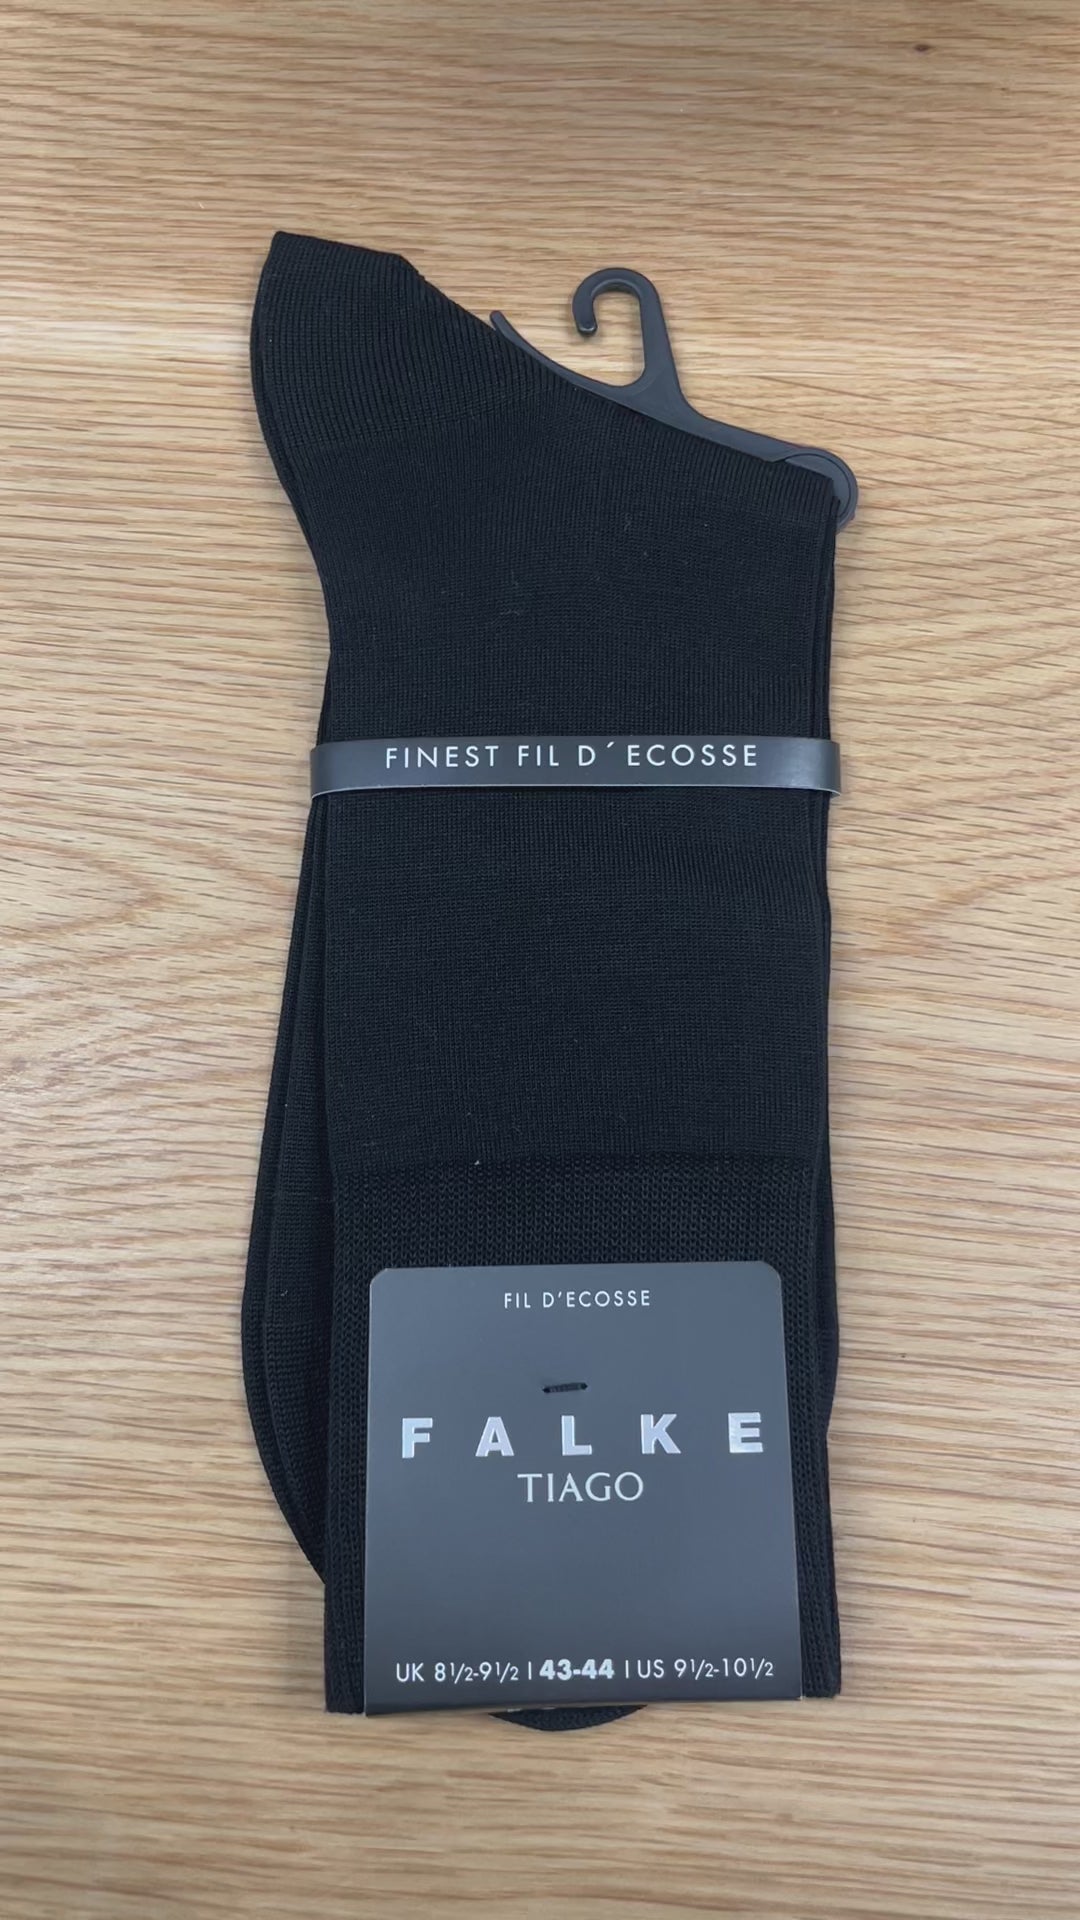 Falke black dress sock